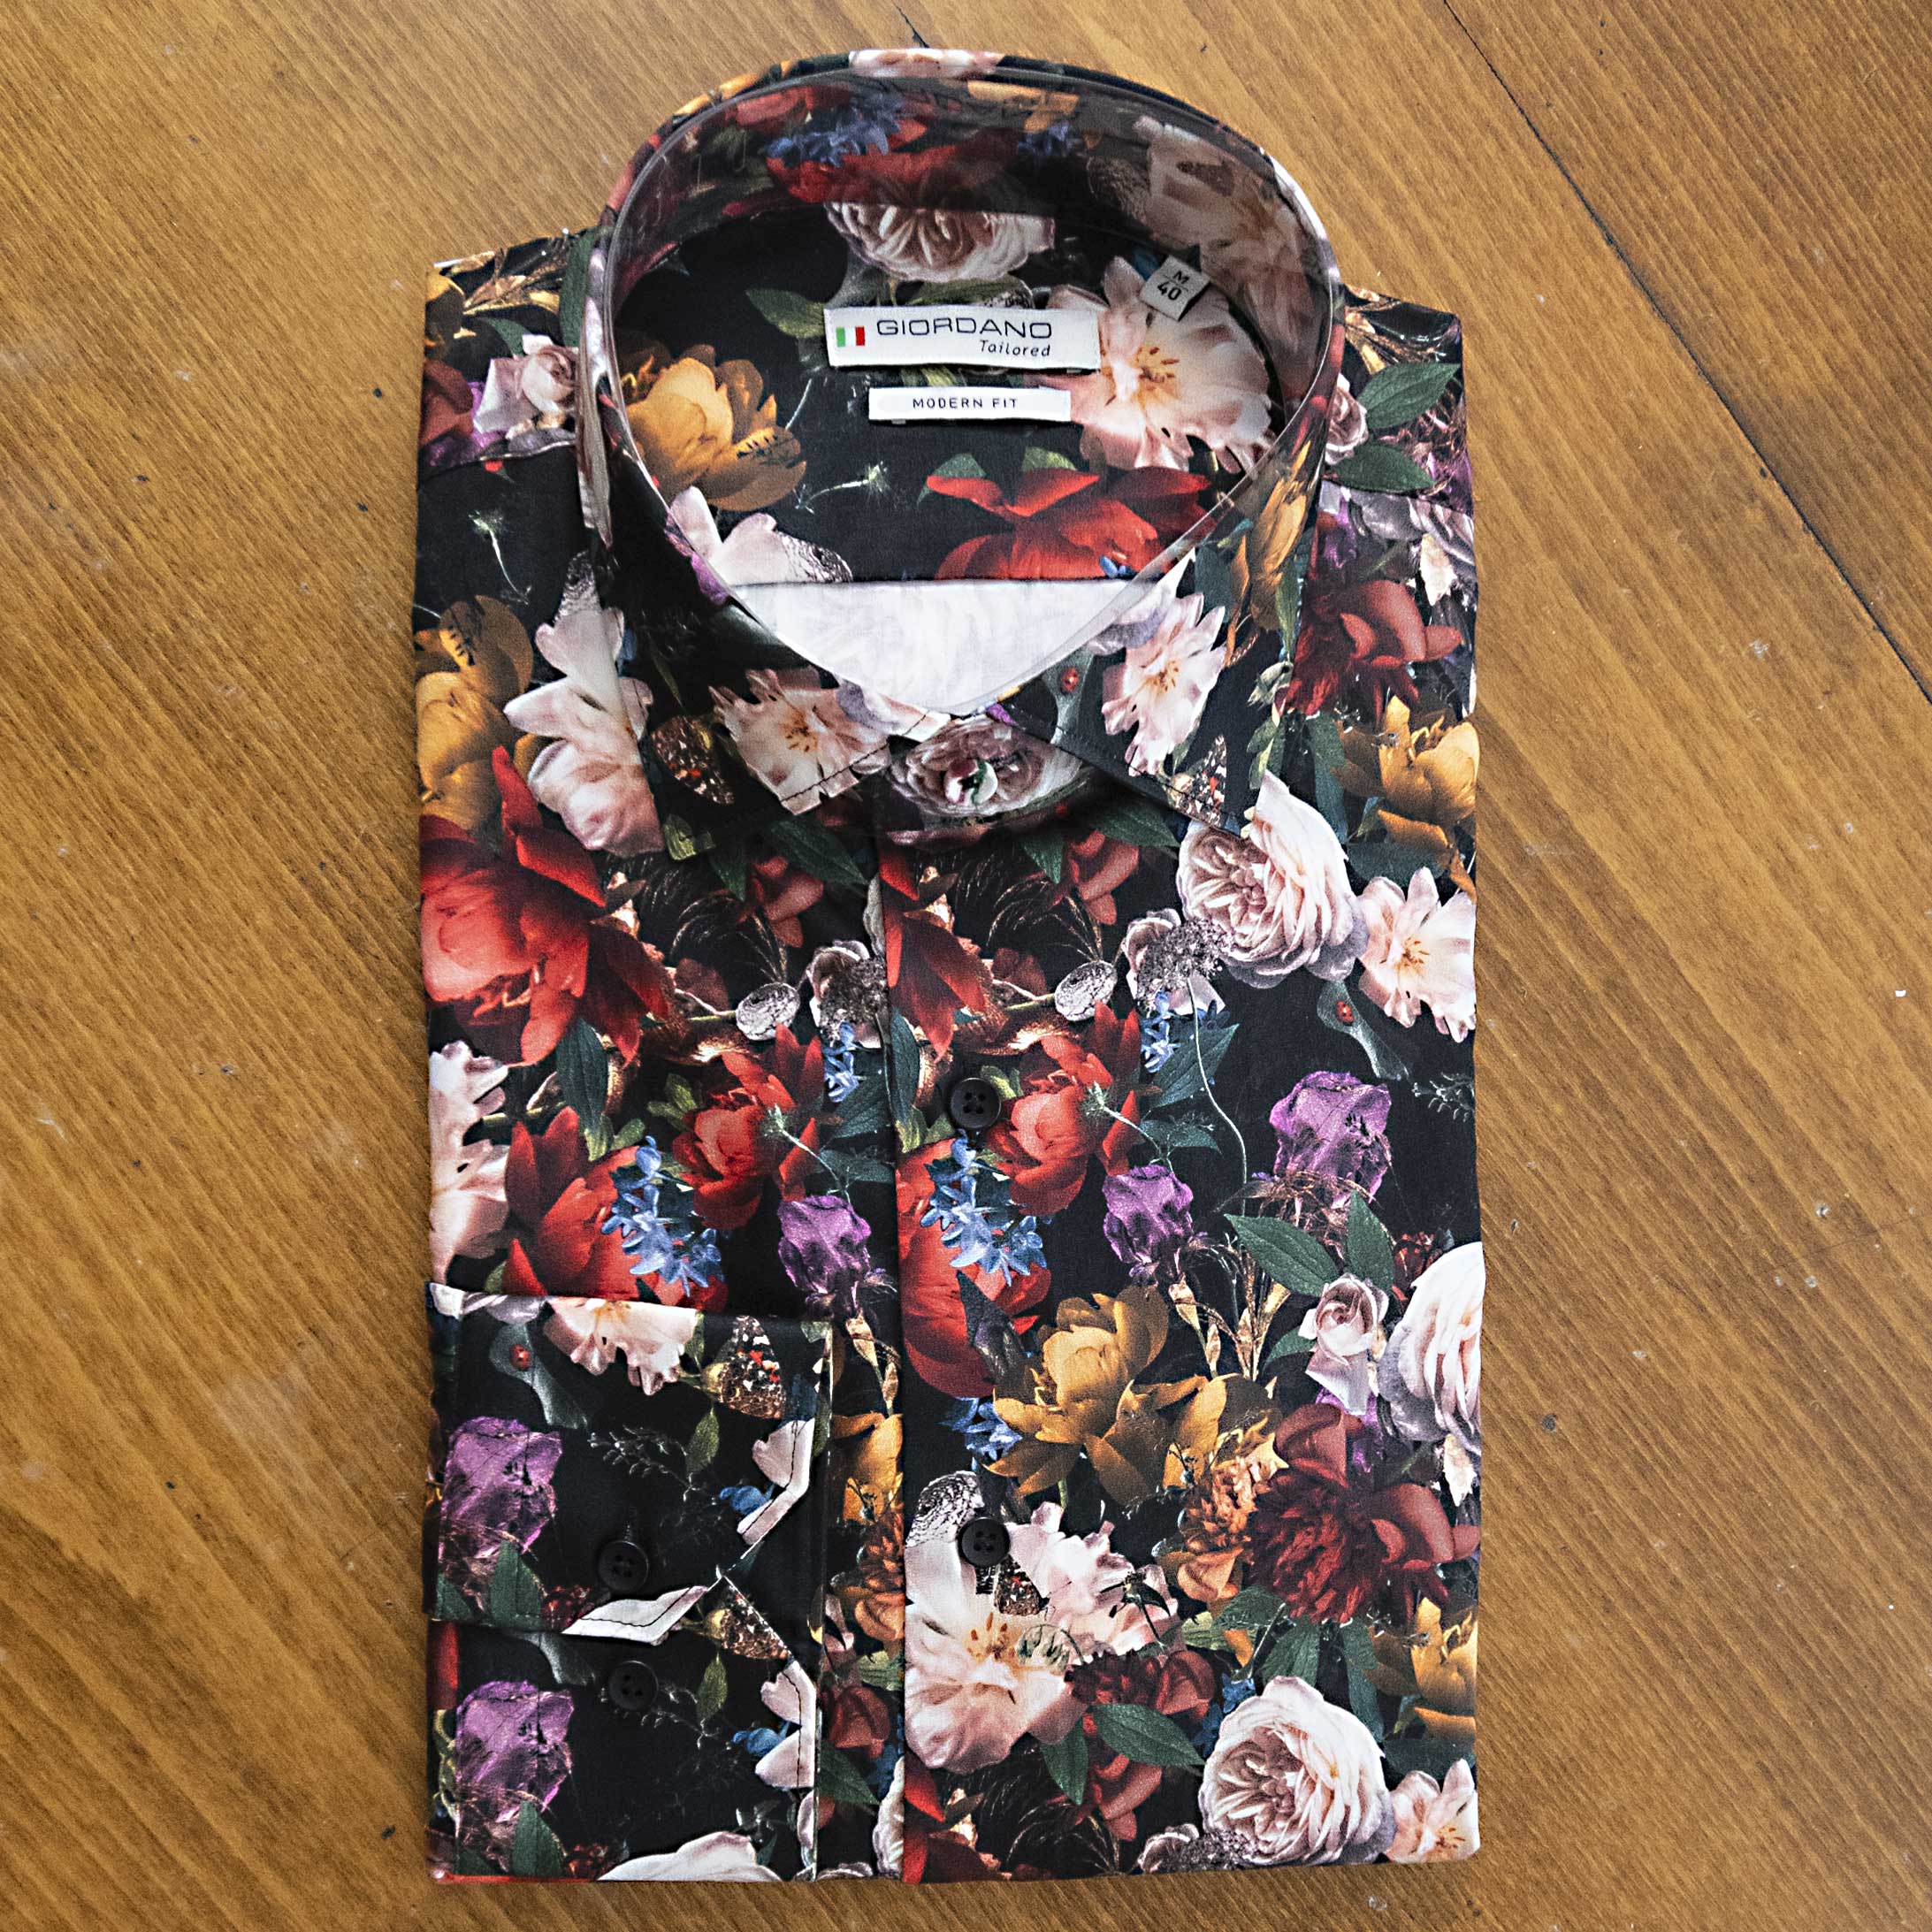 Giordano shirt with large colourful flowers on black - Gabucci Menswear ...